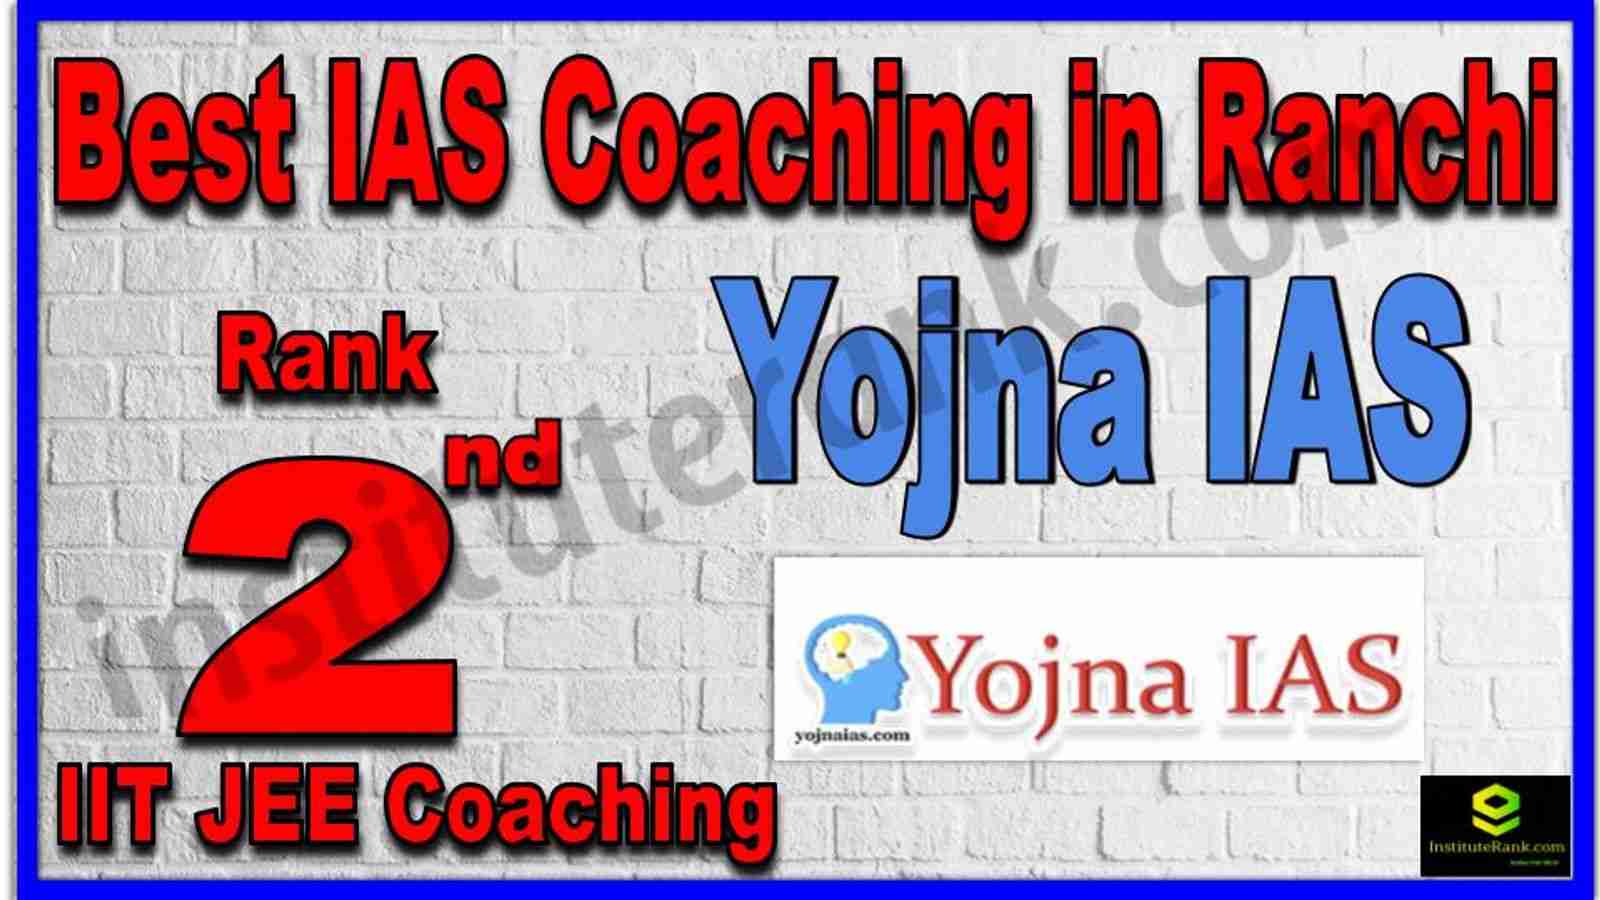 Rank 2nd Best IAS Coaching in Ranchi